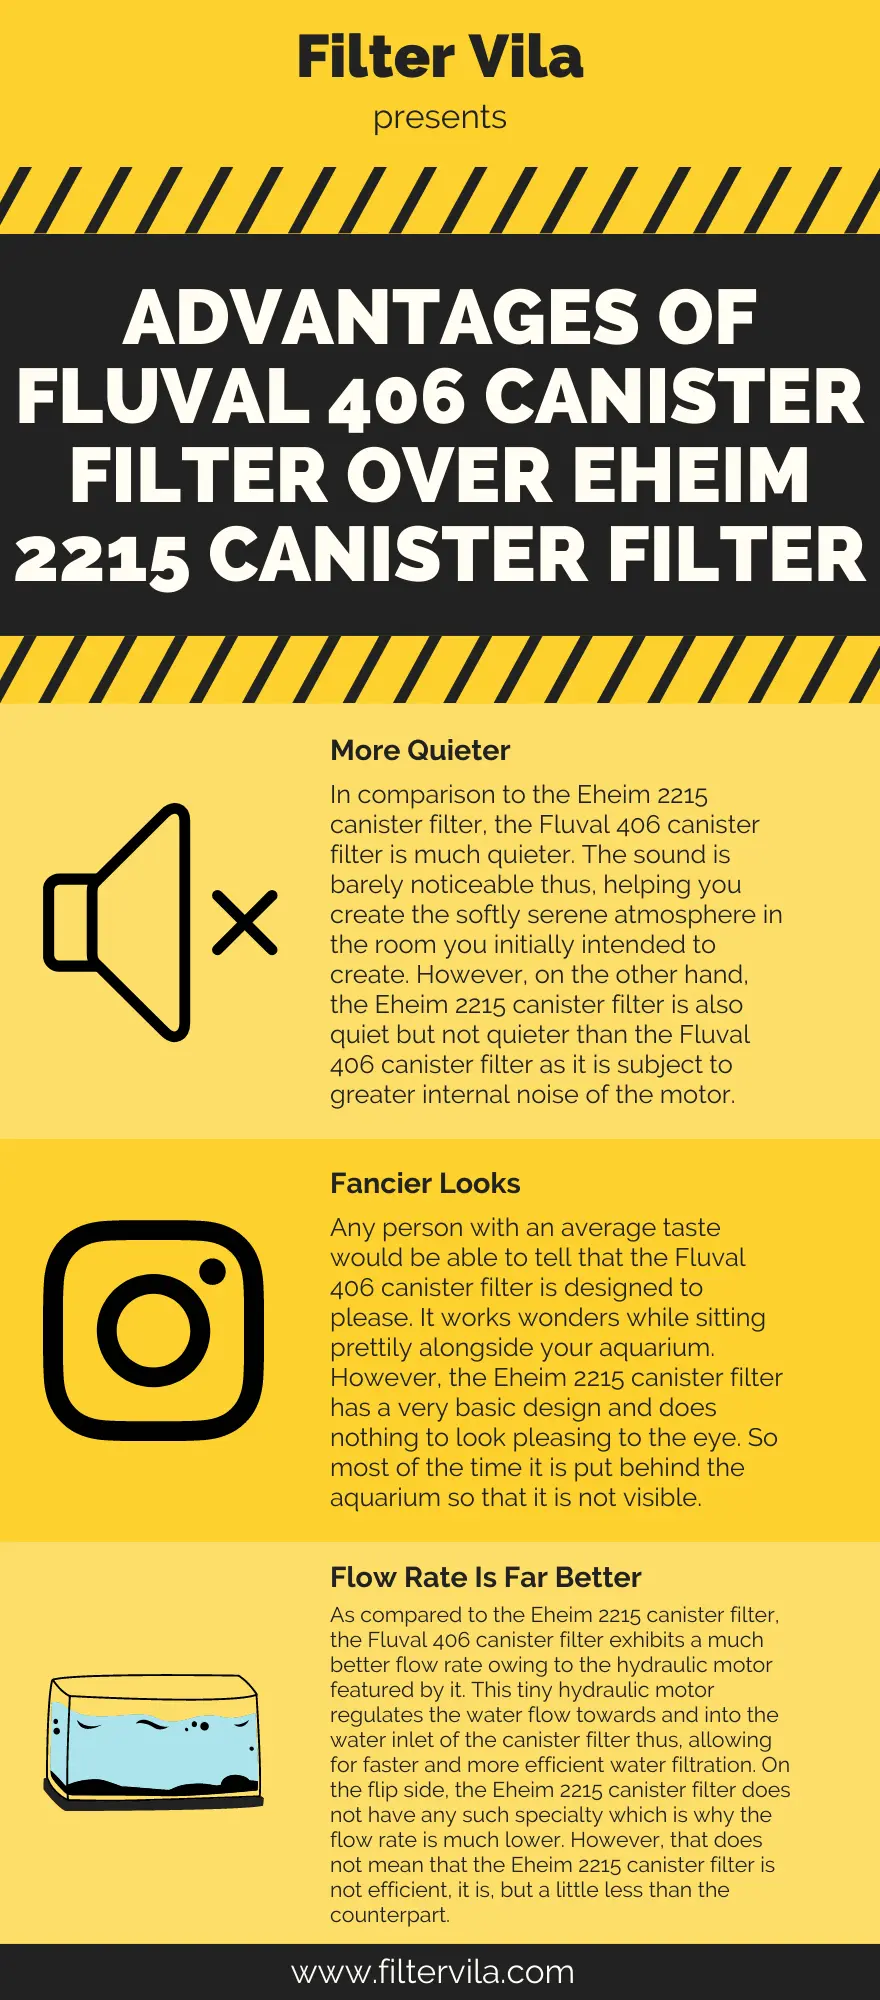 Advantages Of Fluval 406 Canister Filter Over Eheim 2215 Canister Filter